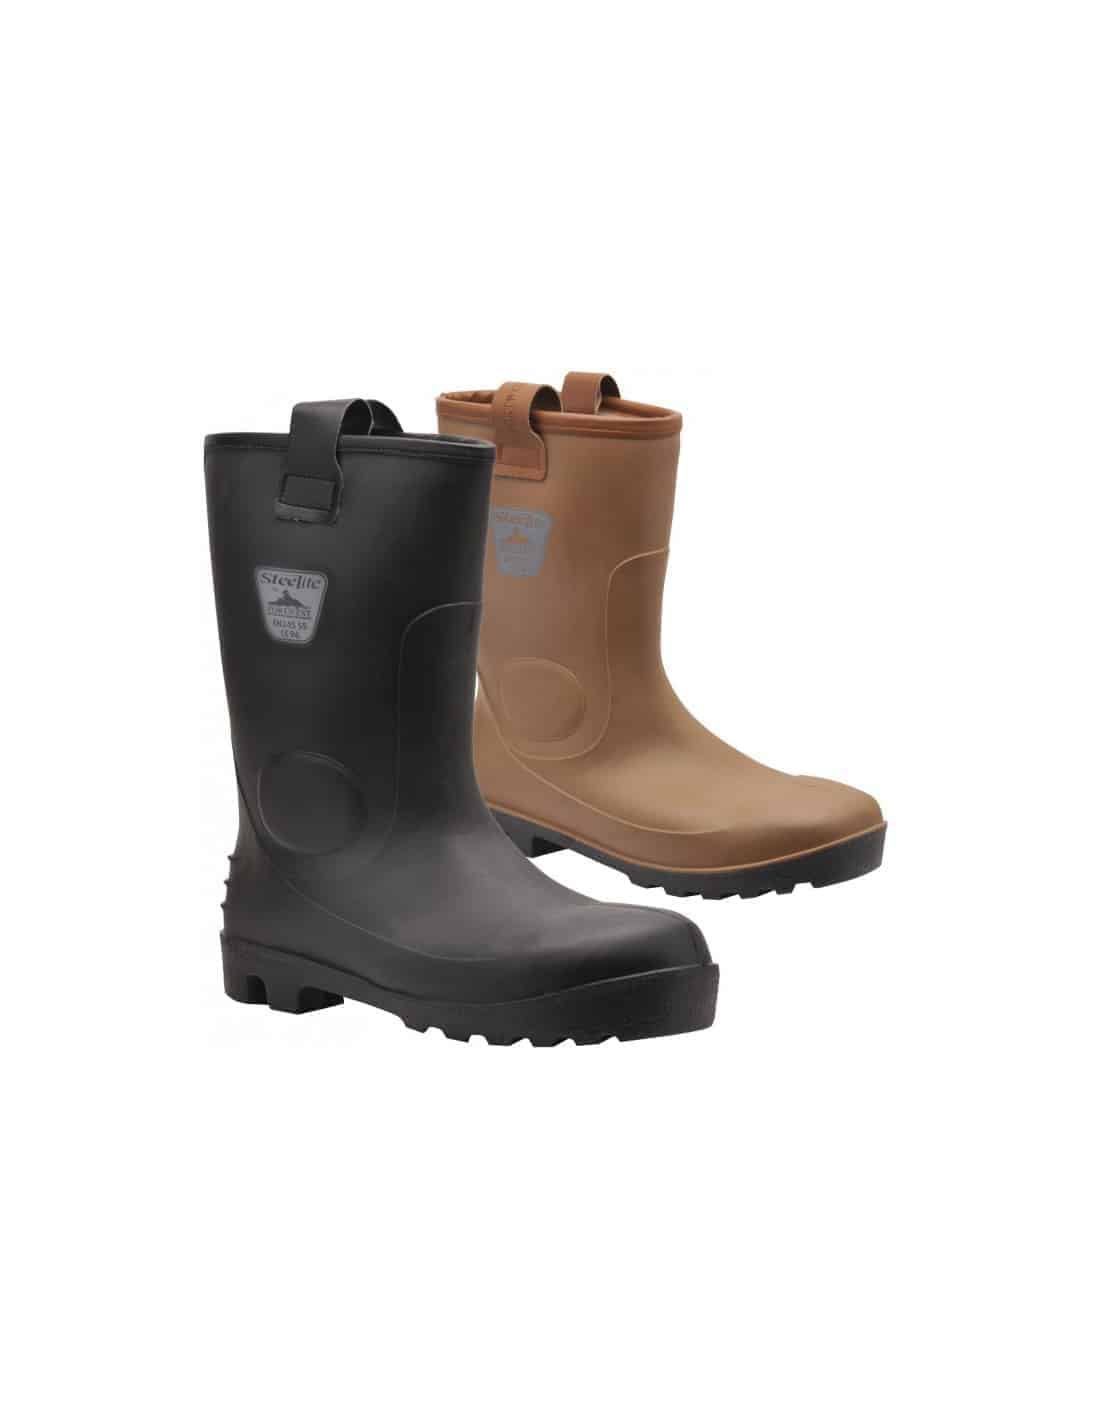 Security waterproof boots -15°C / 10°F